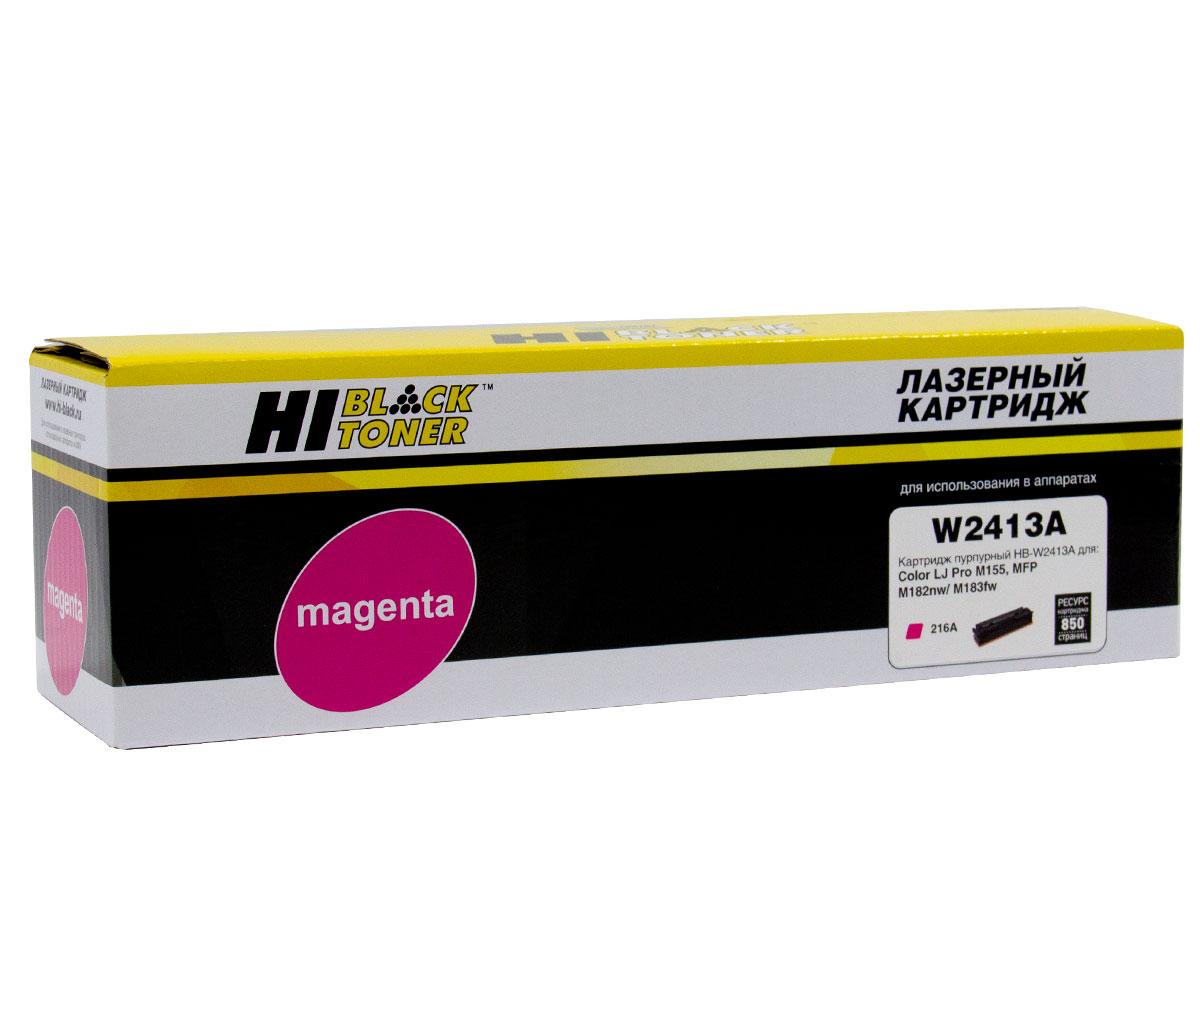 Картридж 216A/ W2413A (для HP Color LaserJet Pro M155/ M182/ M183) Hi-Black, пурпурный